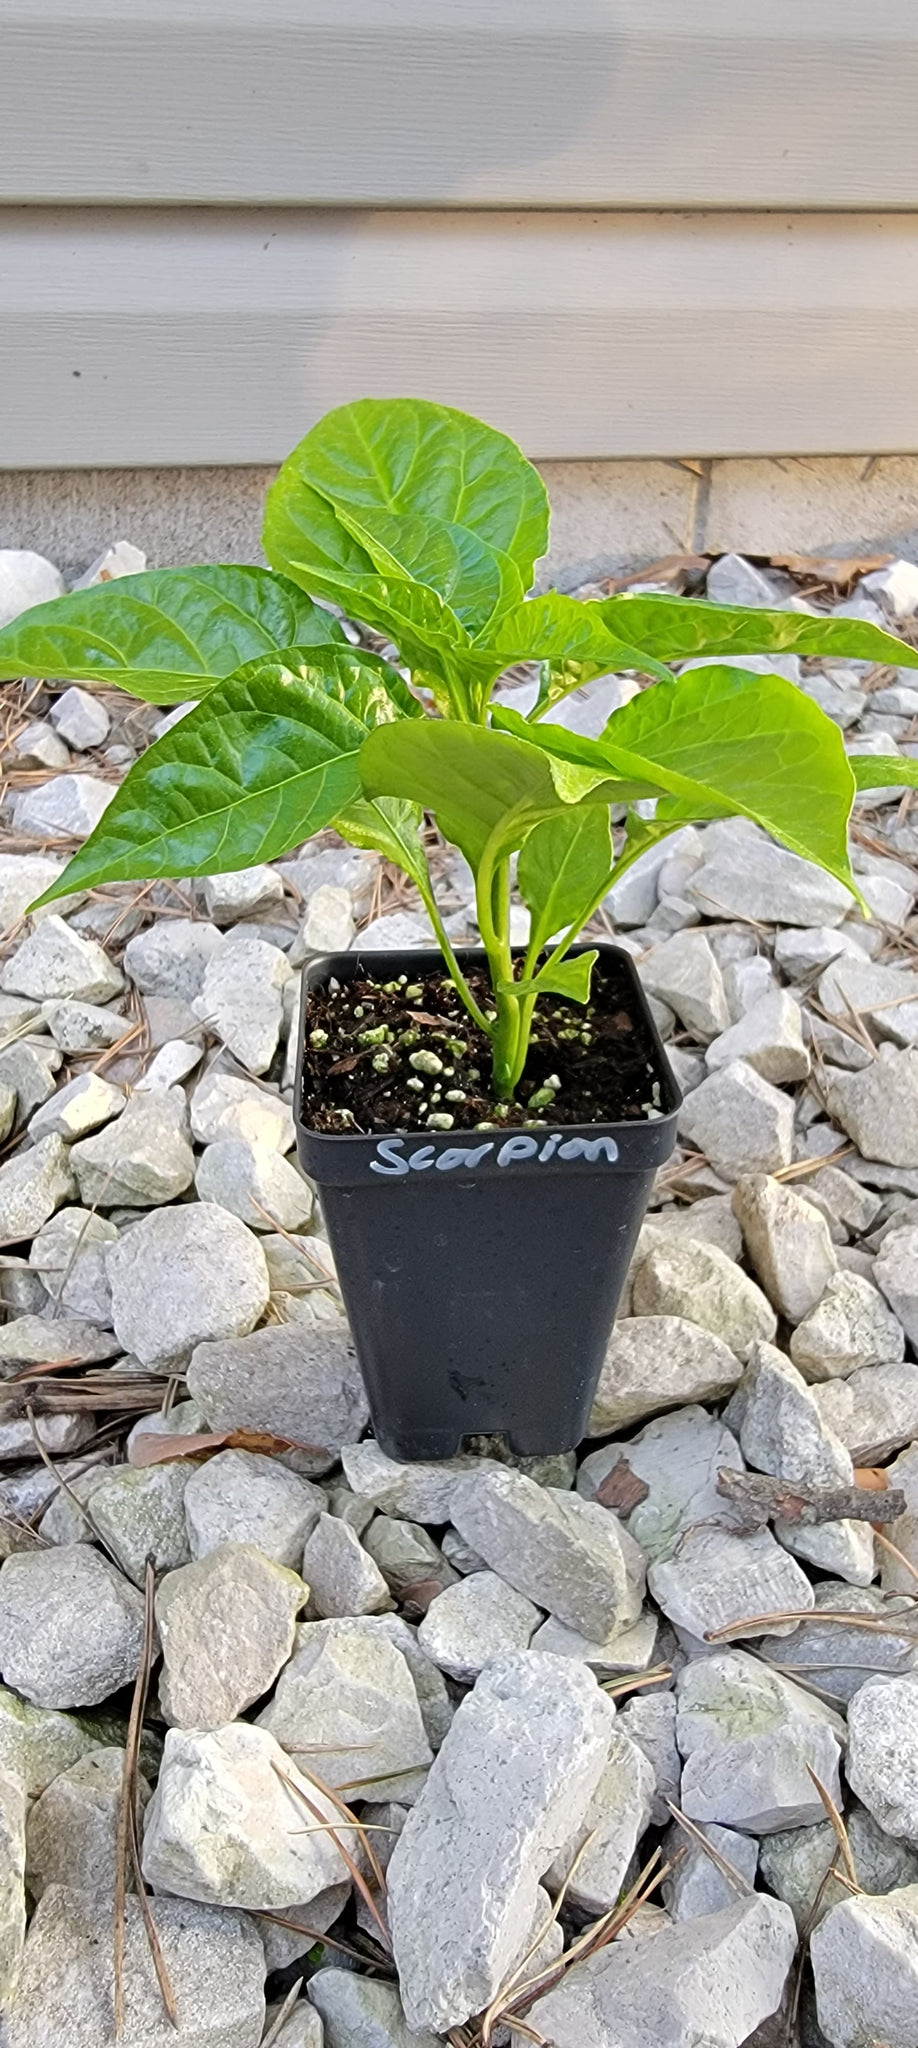 Trinidad Moruga Scorpion Pepper Live Plants - 1 Seedling